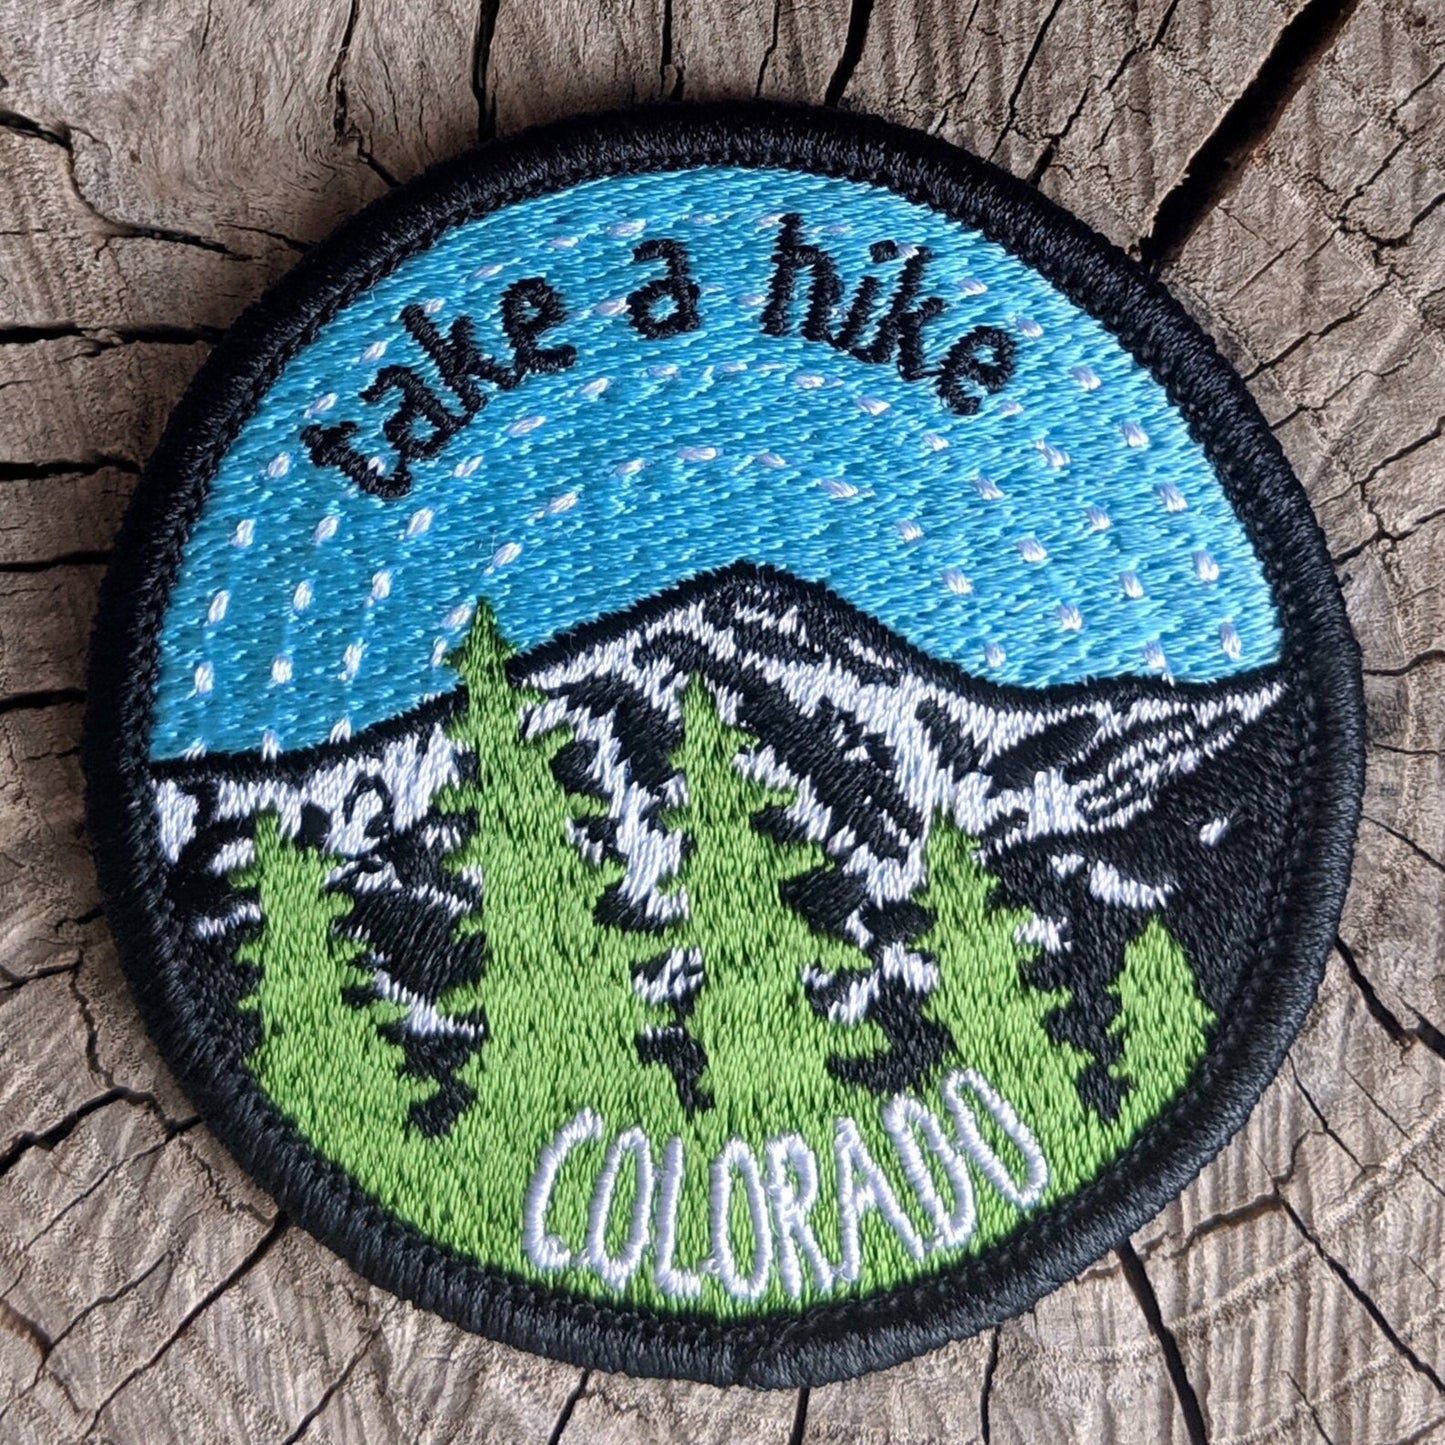 patch | take a hike Colorado